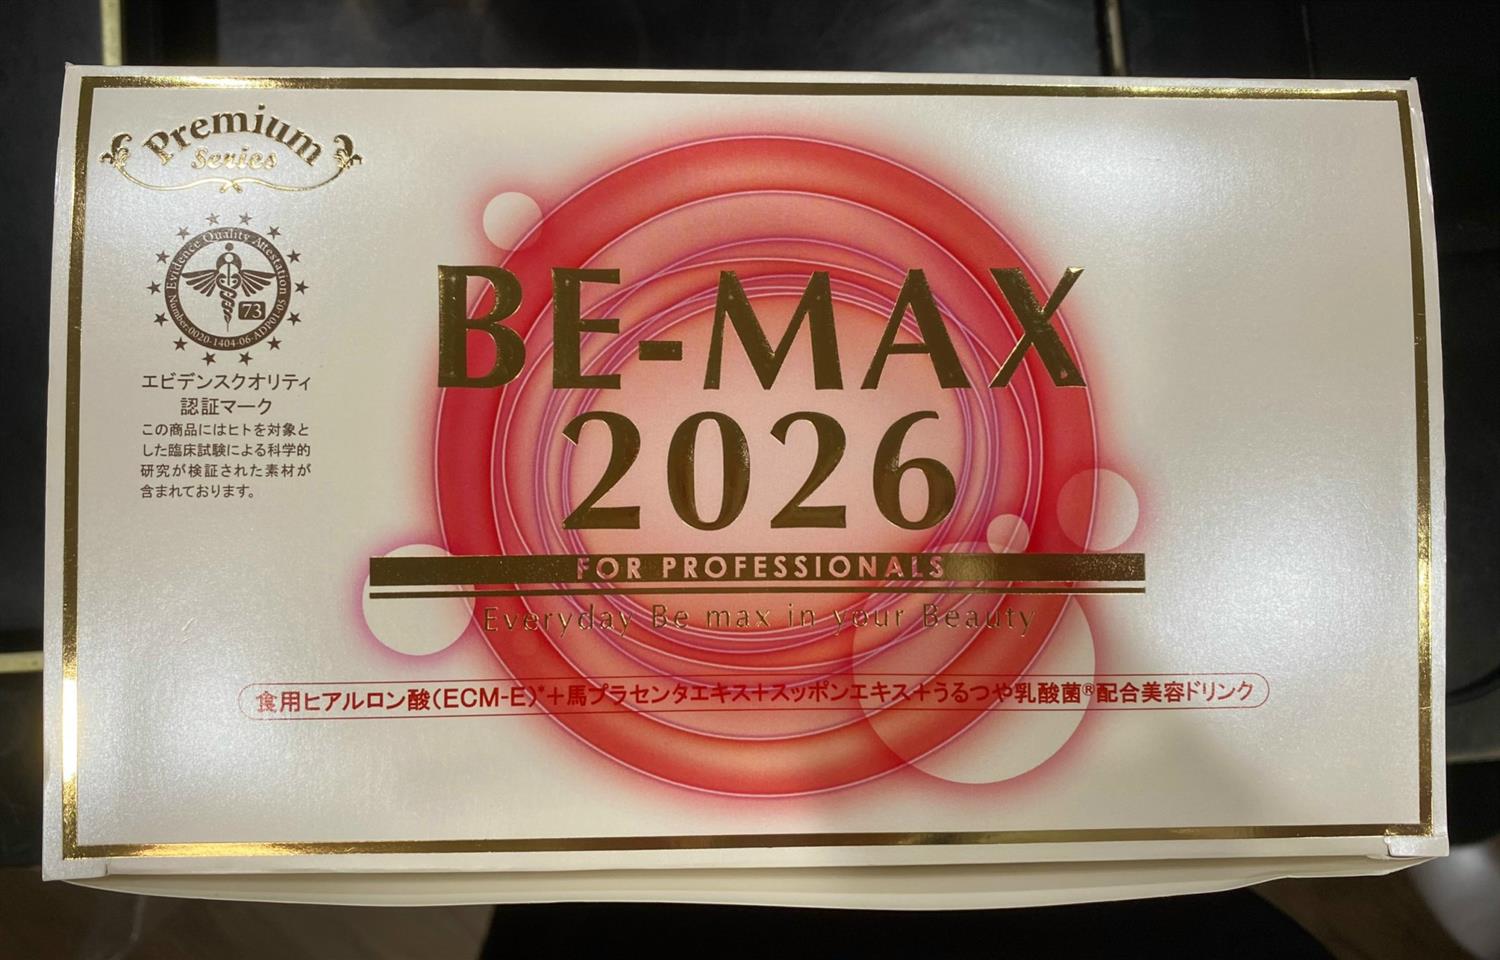 Be - Max 2026